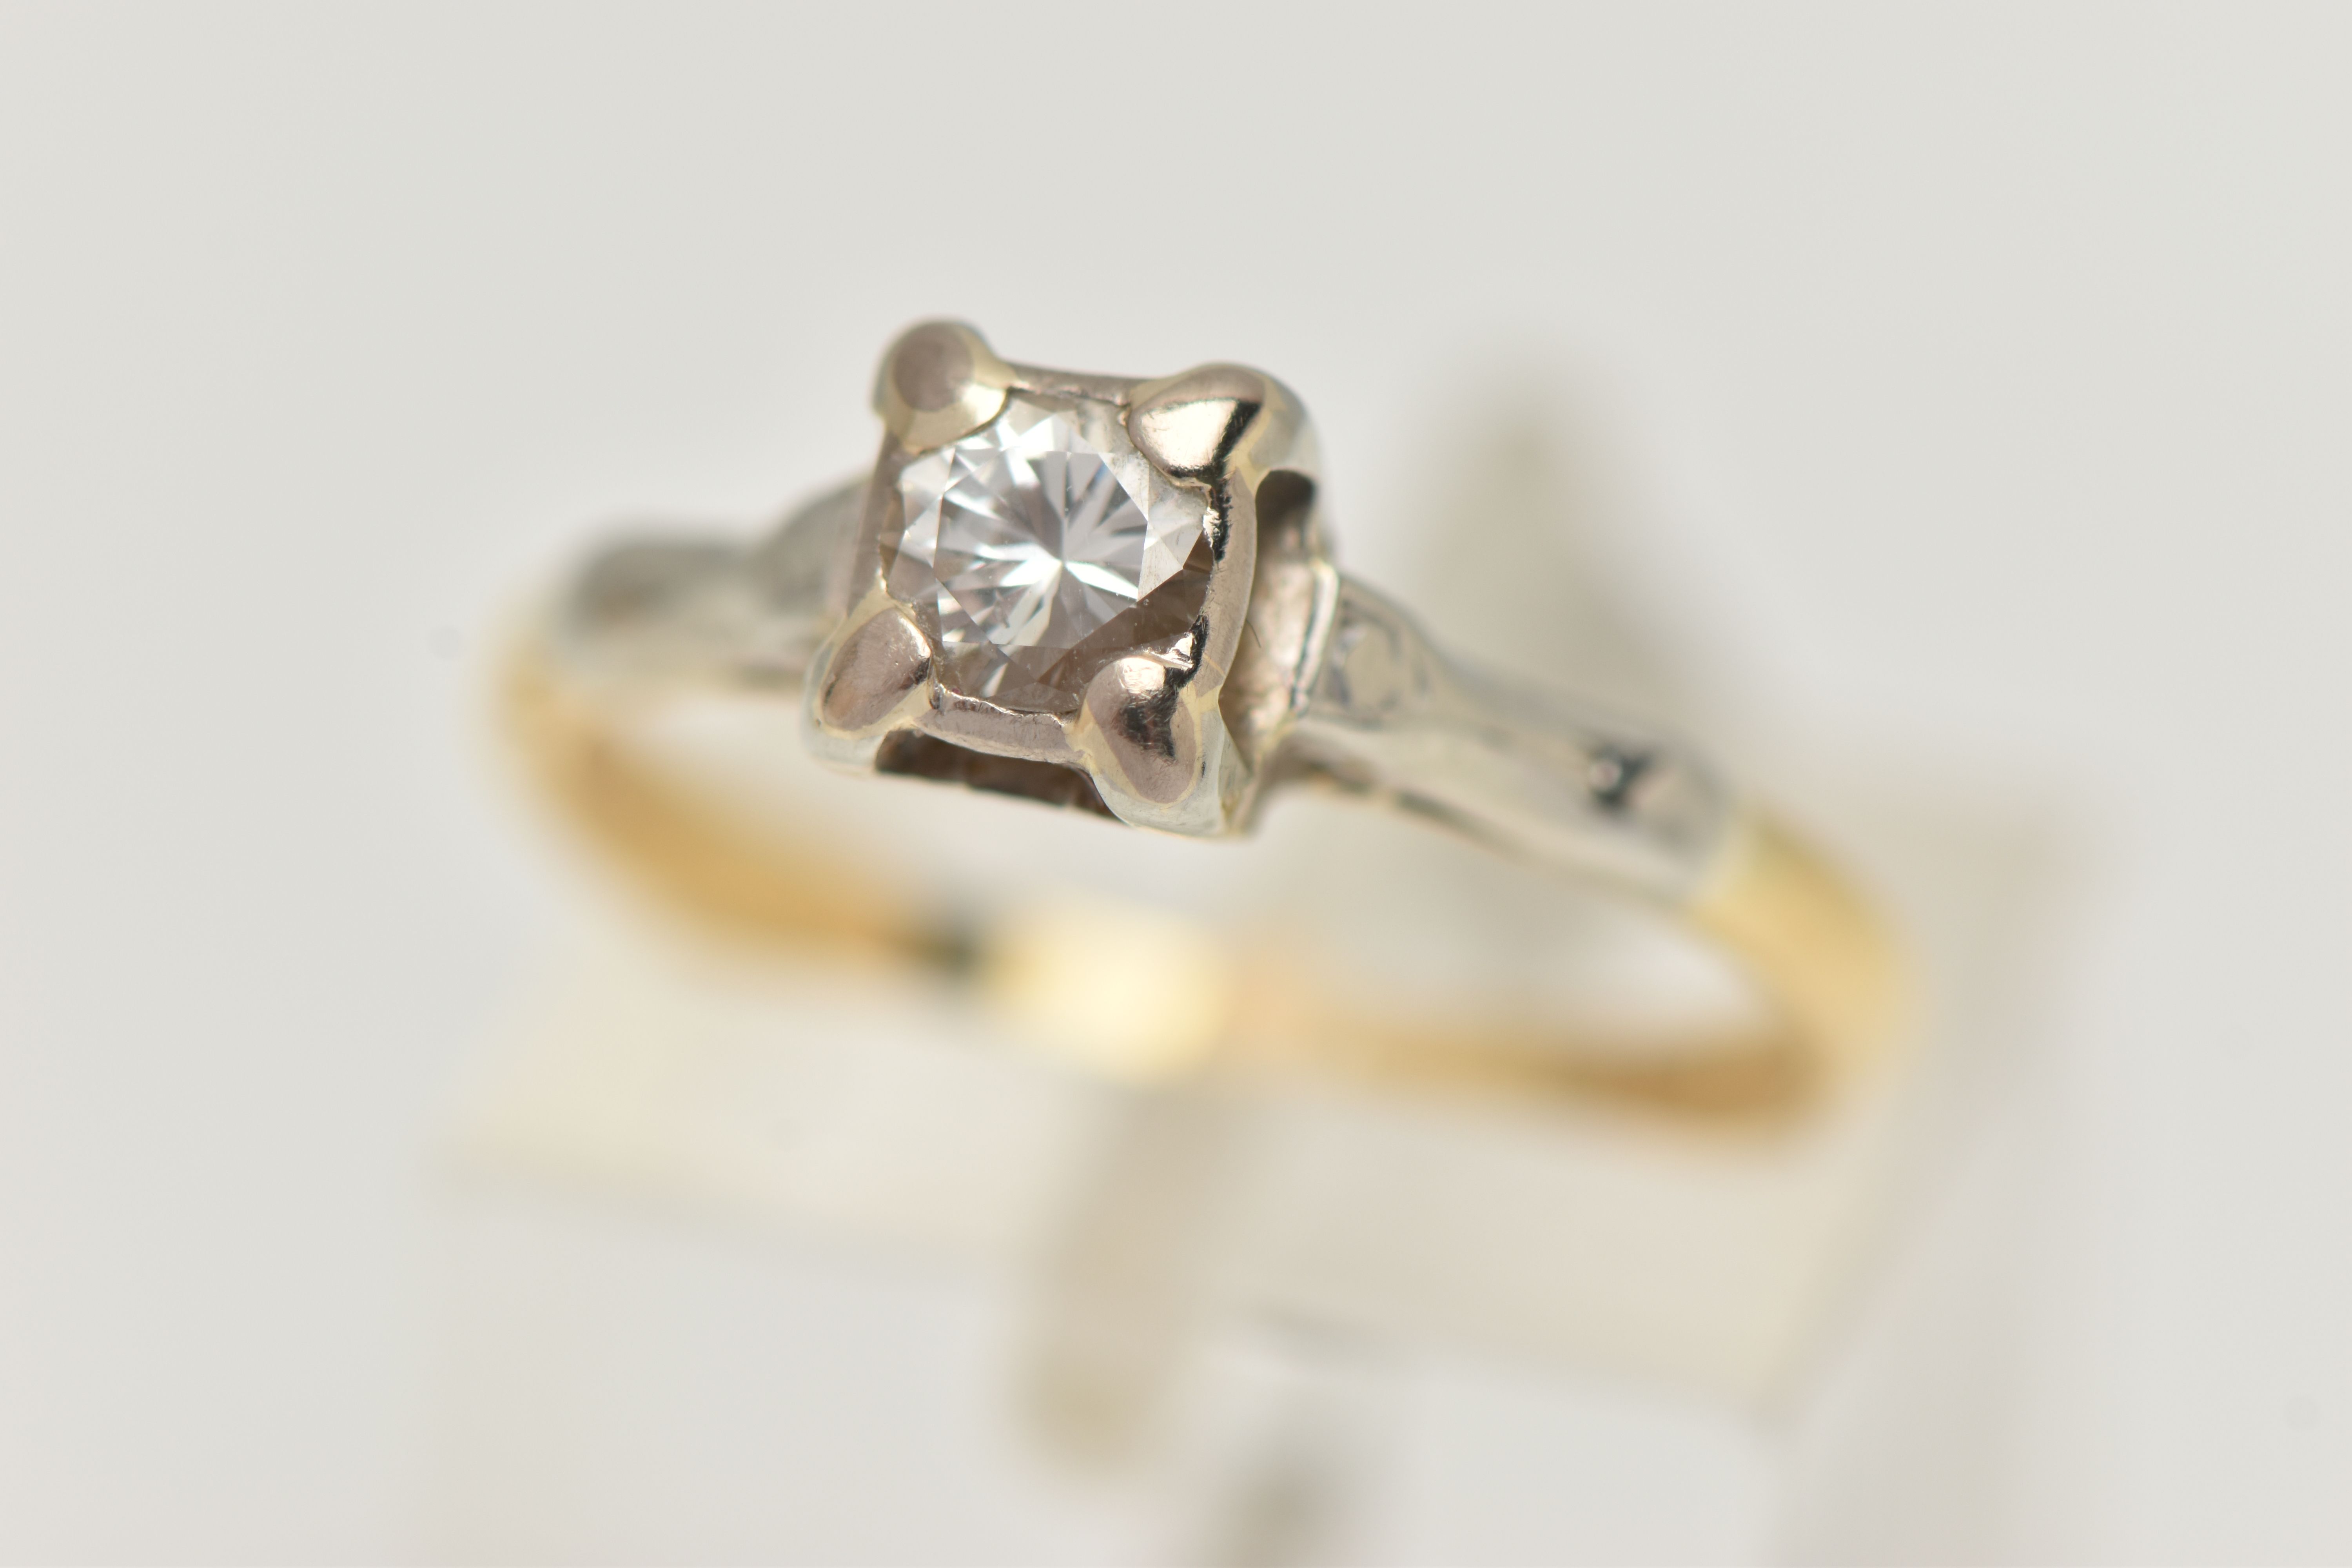 AN 18CT GOLD DIAMOND SINGLE STONE RING, round brilliant cut diamond, claw rub over setting,